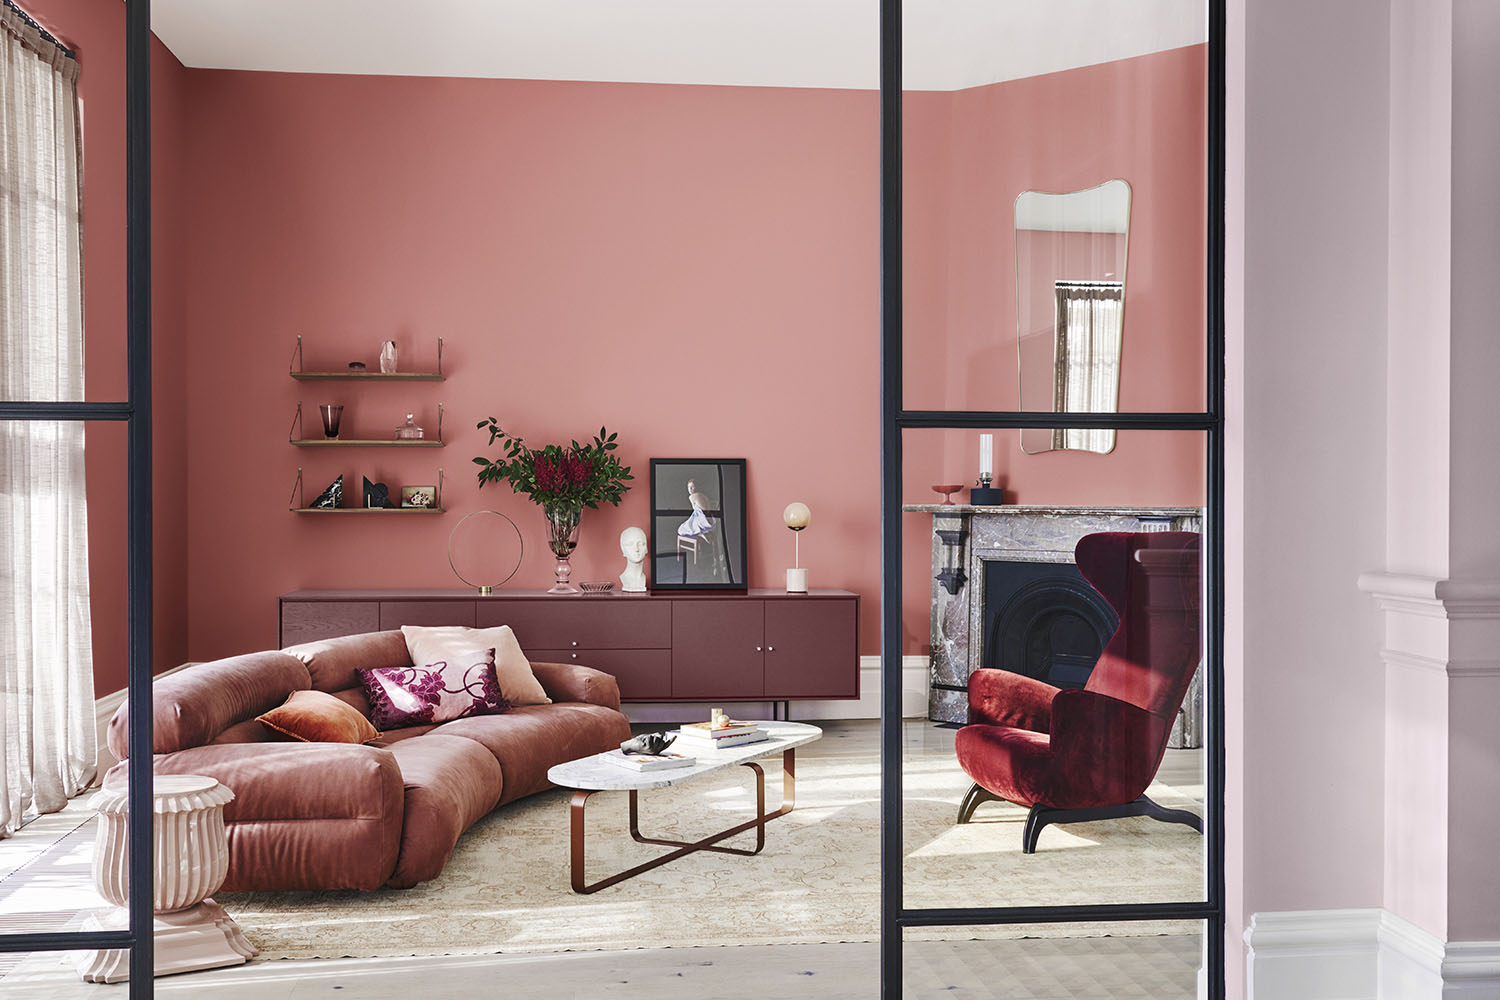 Dulux colour forecast 2019: biggest trends for interior paint | Better